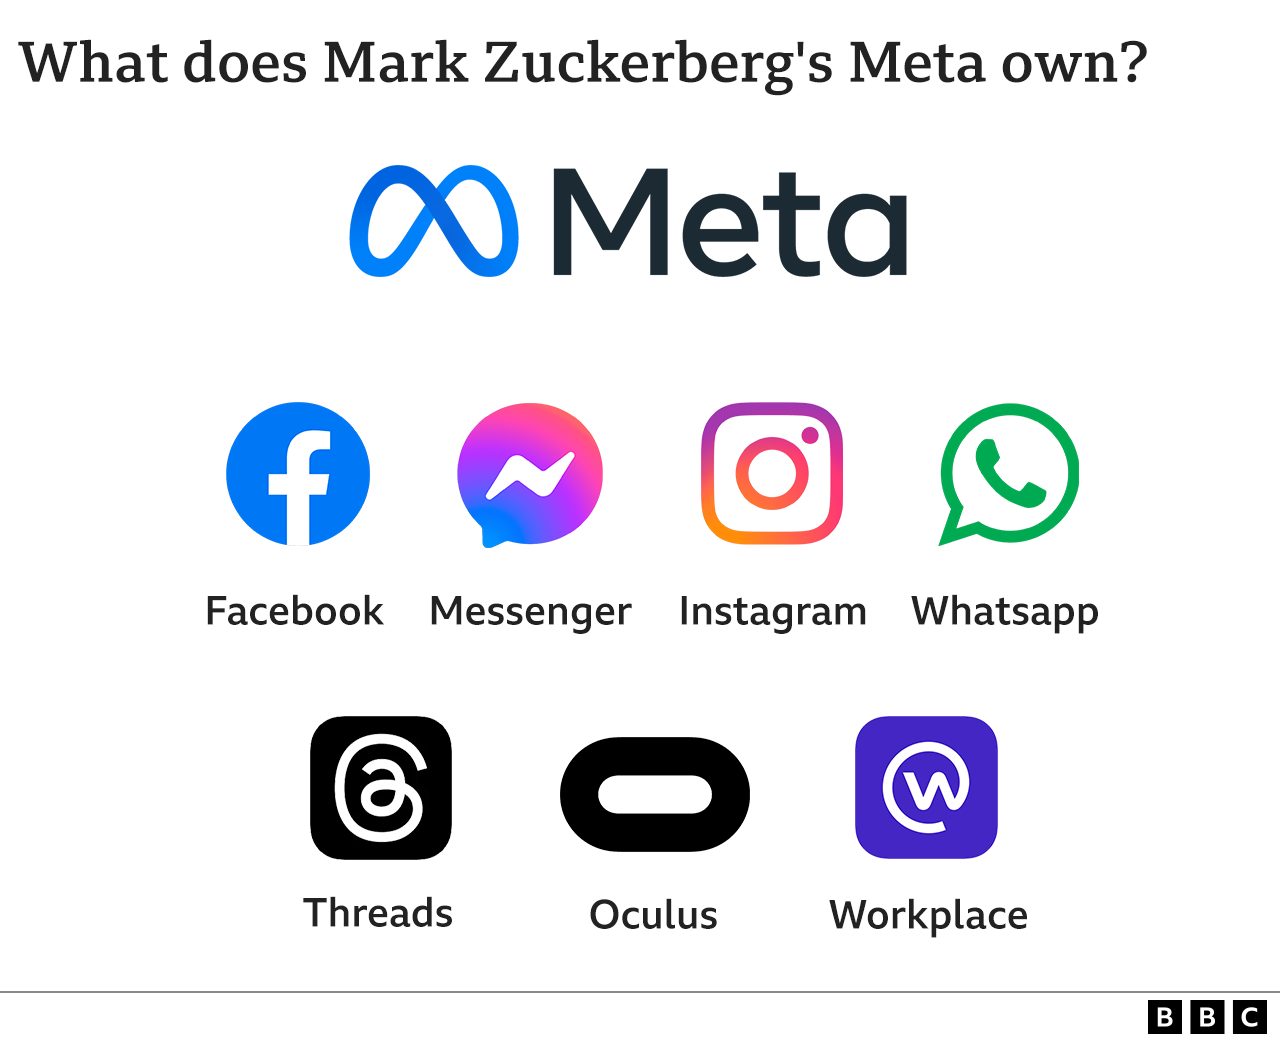 Graphic showing that Mark Zuckerberg's Meta also owns Facebook, Messenger, Instagram, Whatsapp, Threads, Oculus and Workplace